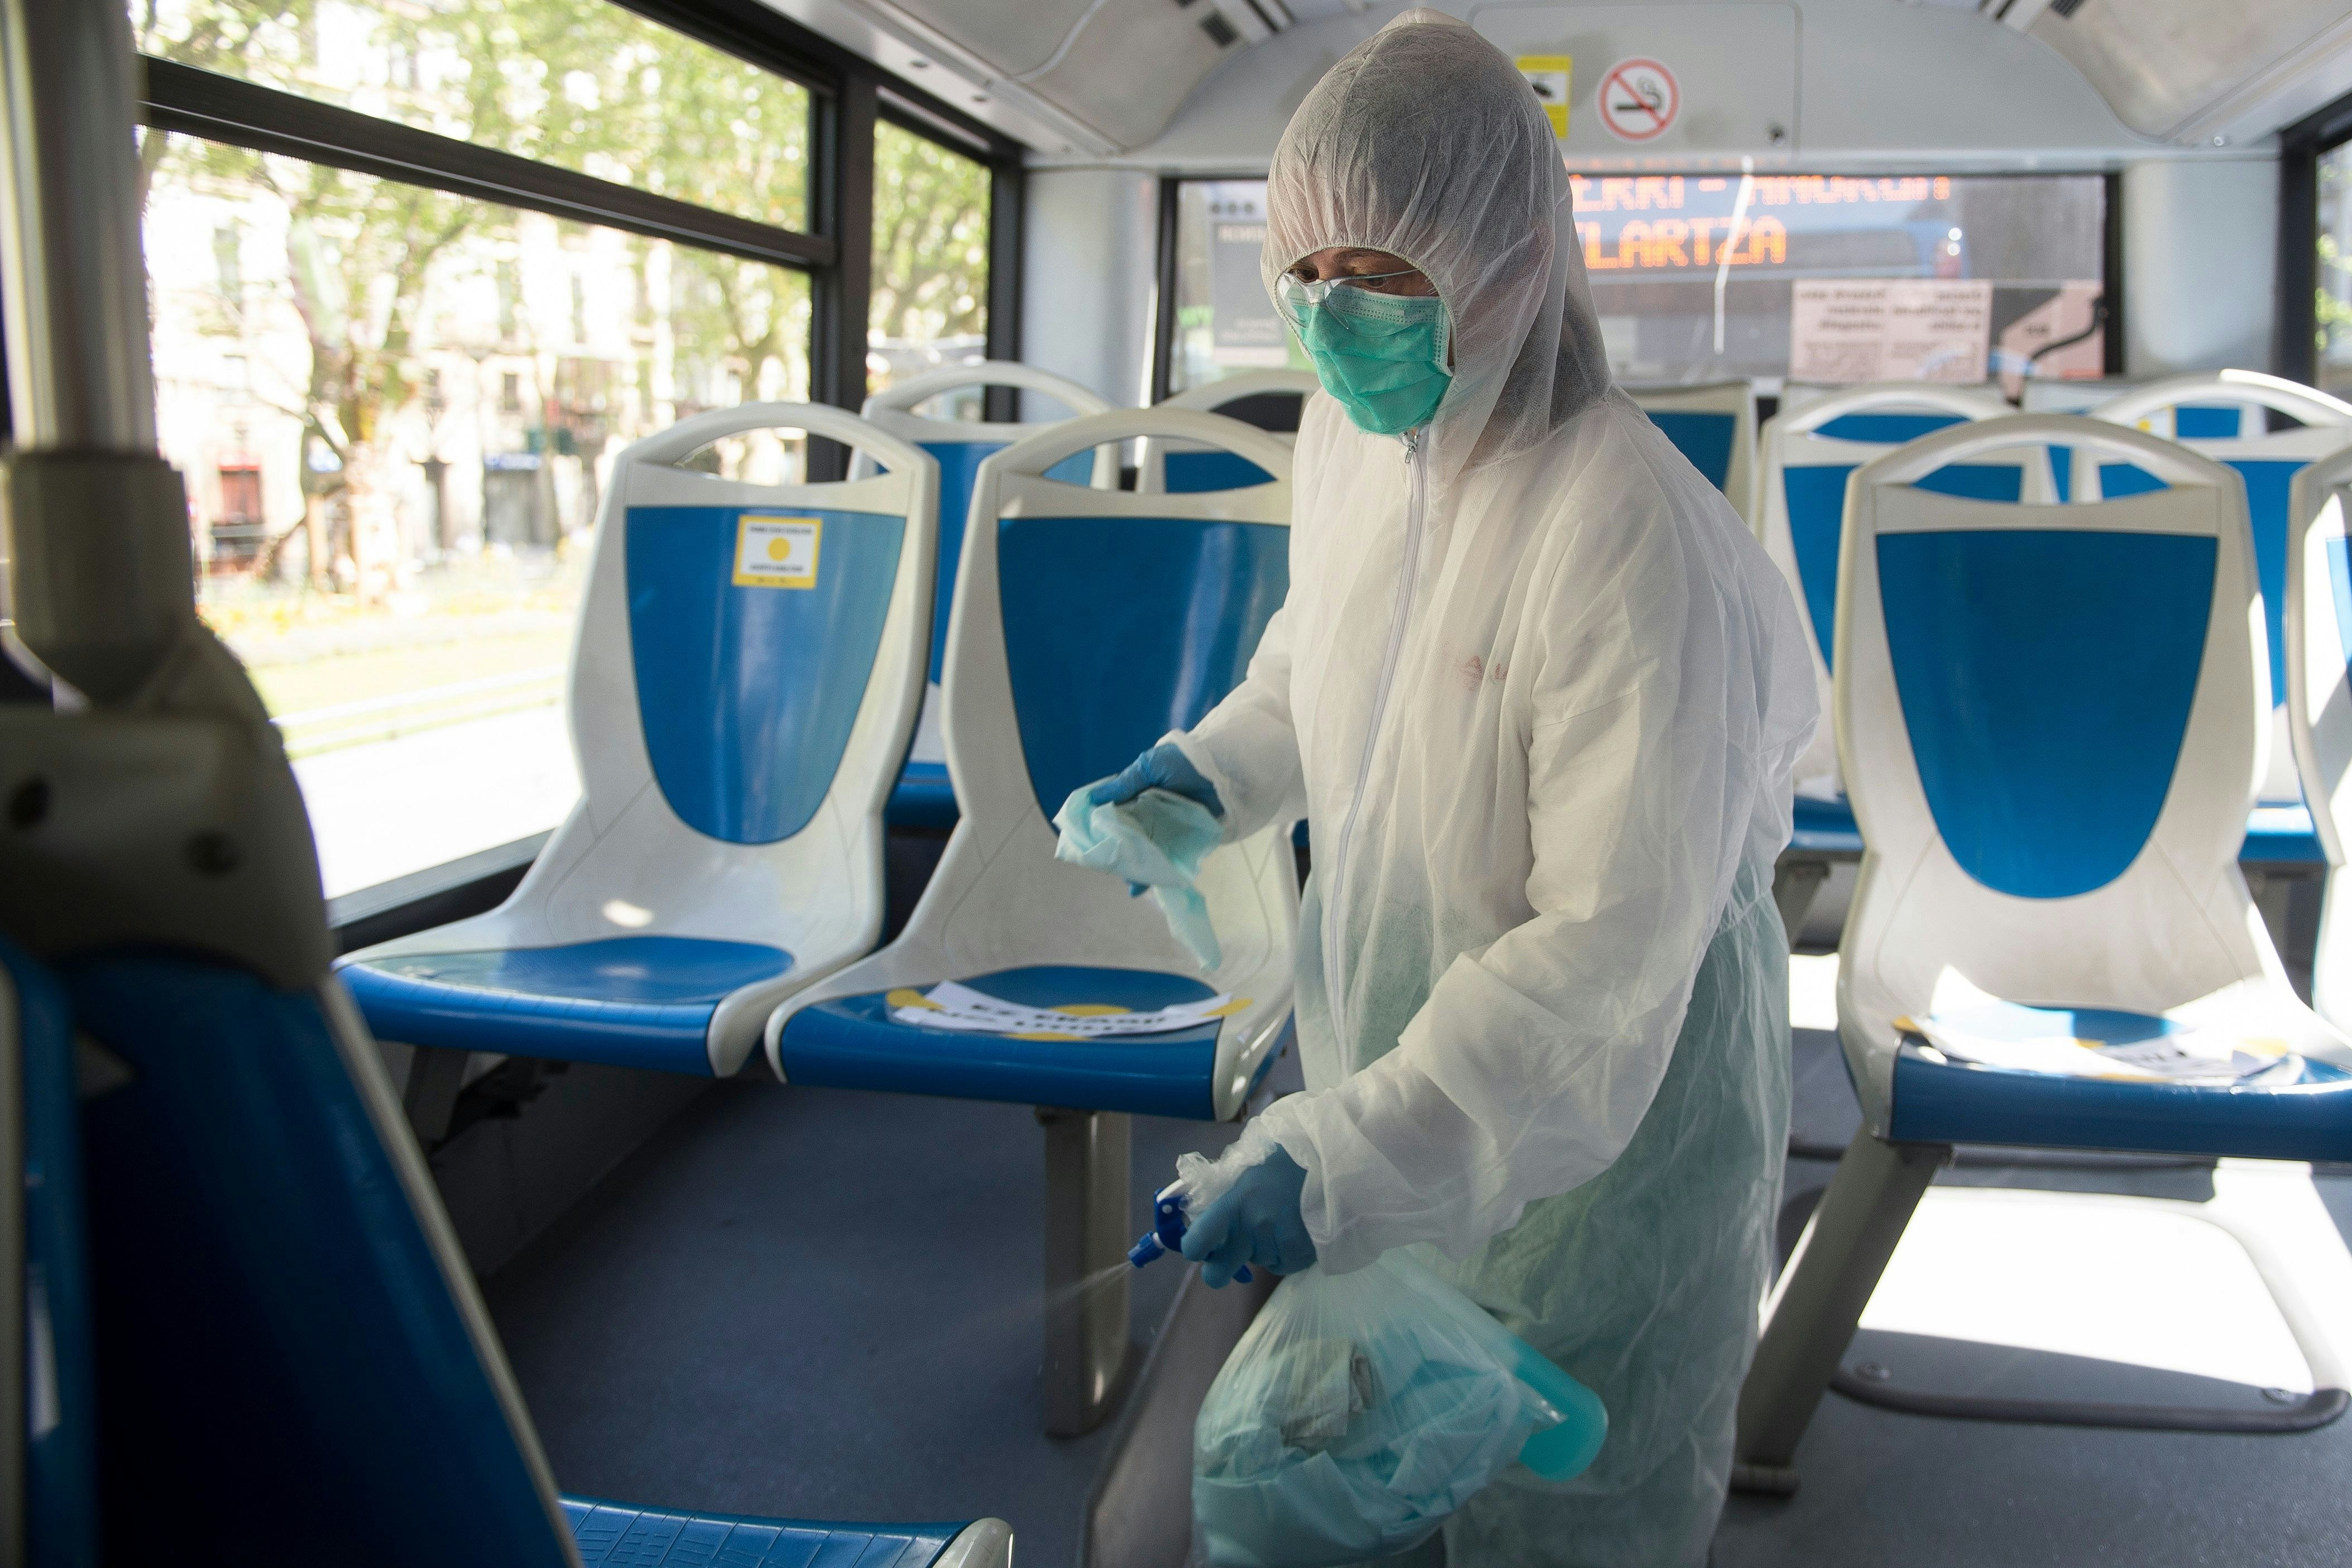 An employee wearing PPE cleans a public bus in Spain